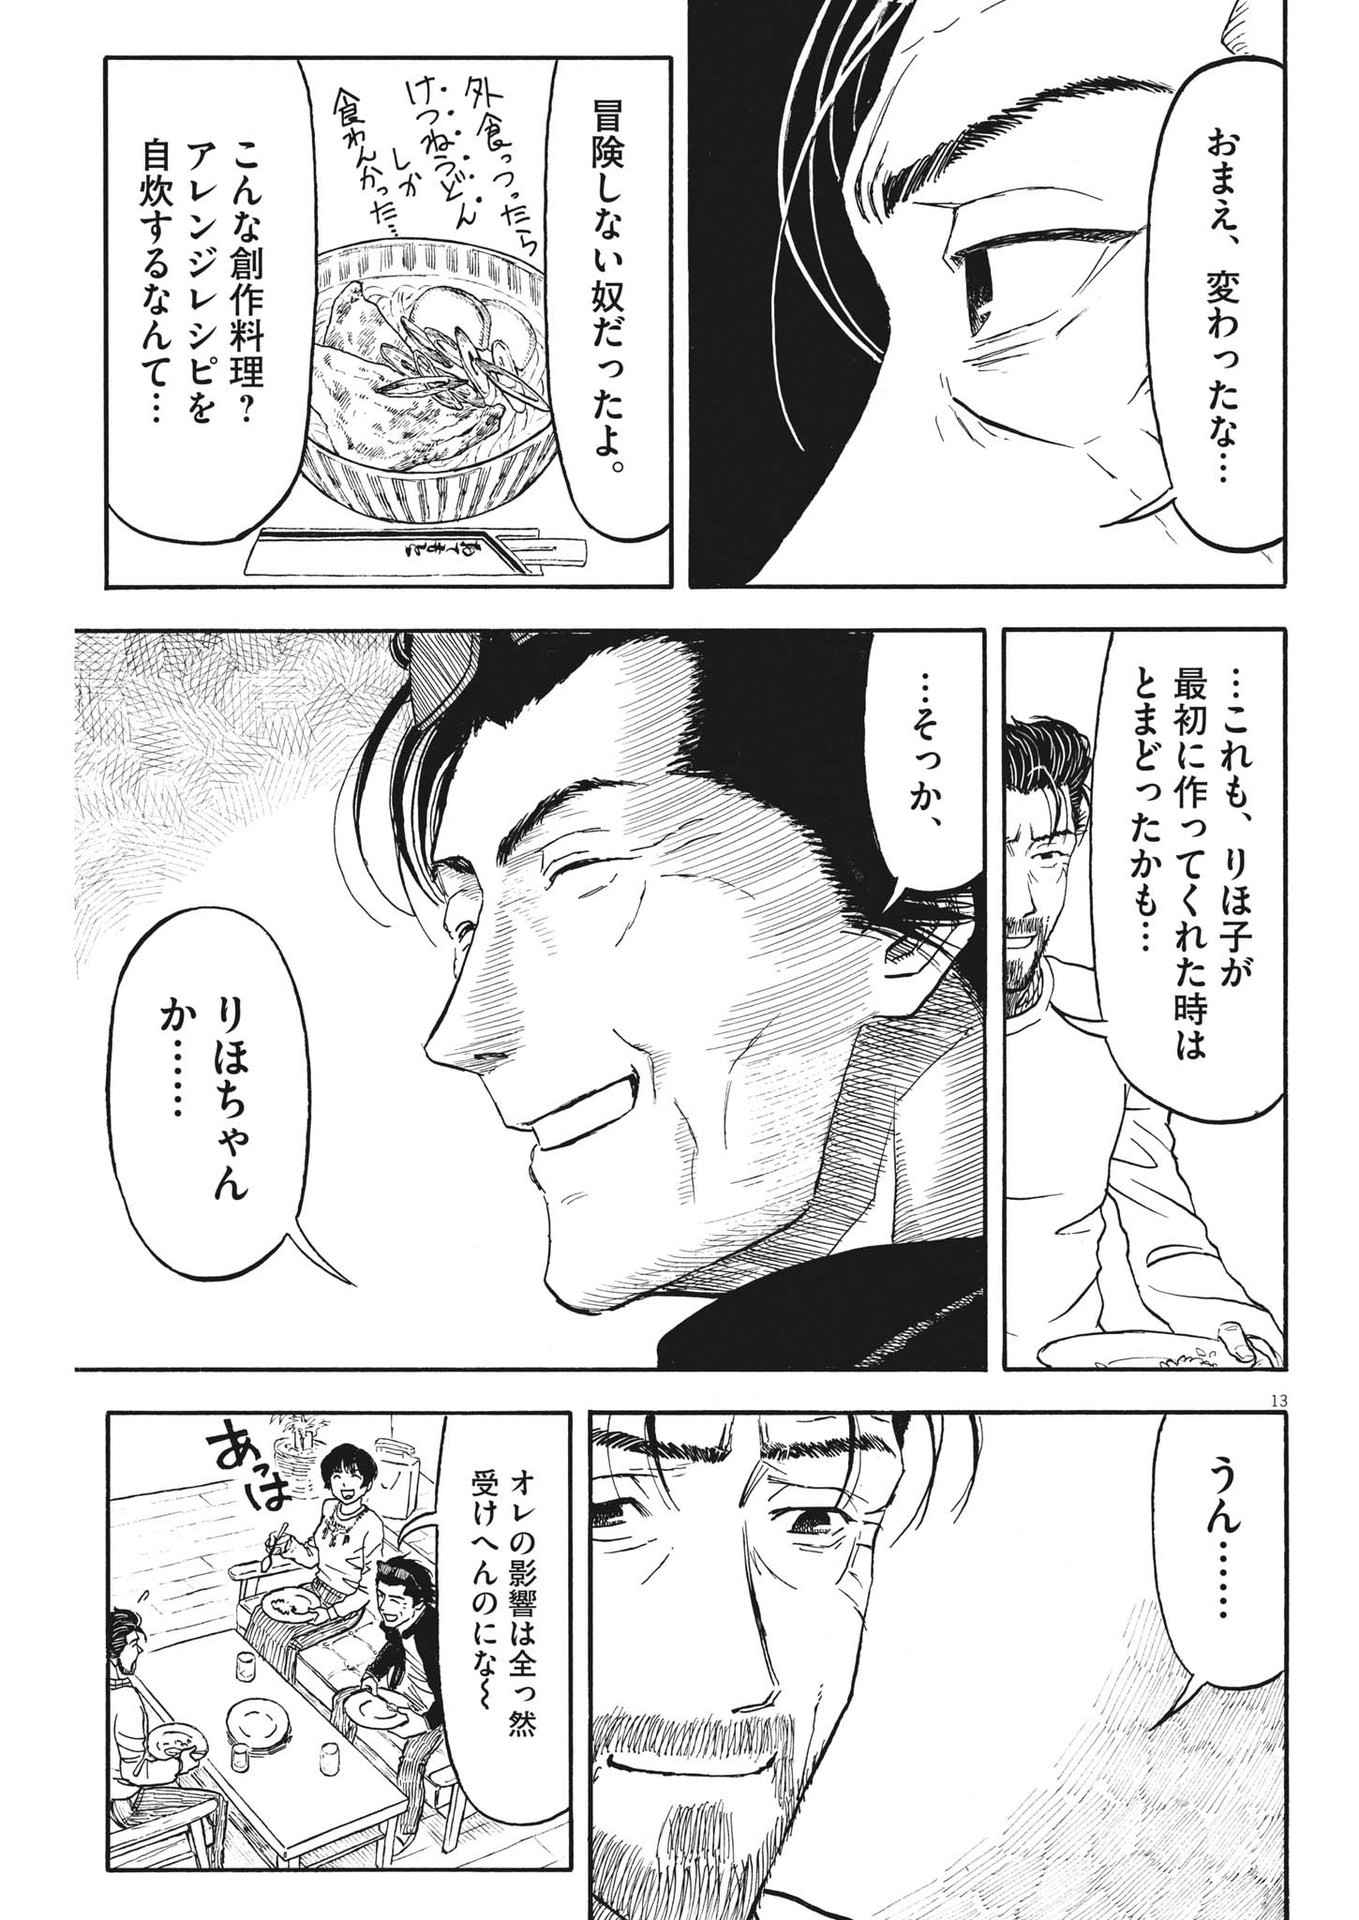 Komegura Fuufu no Recipe-chou - Chapter 32 - Page 13